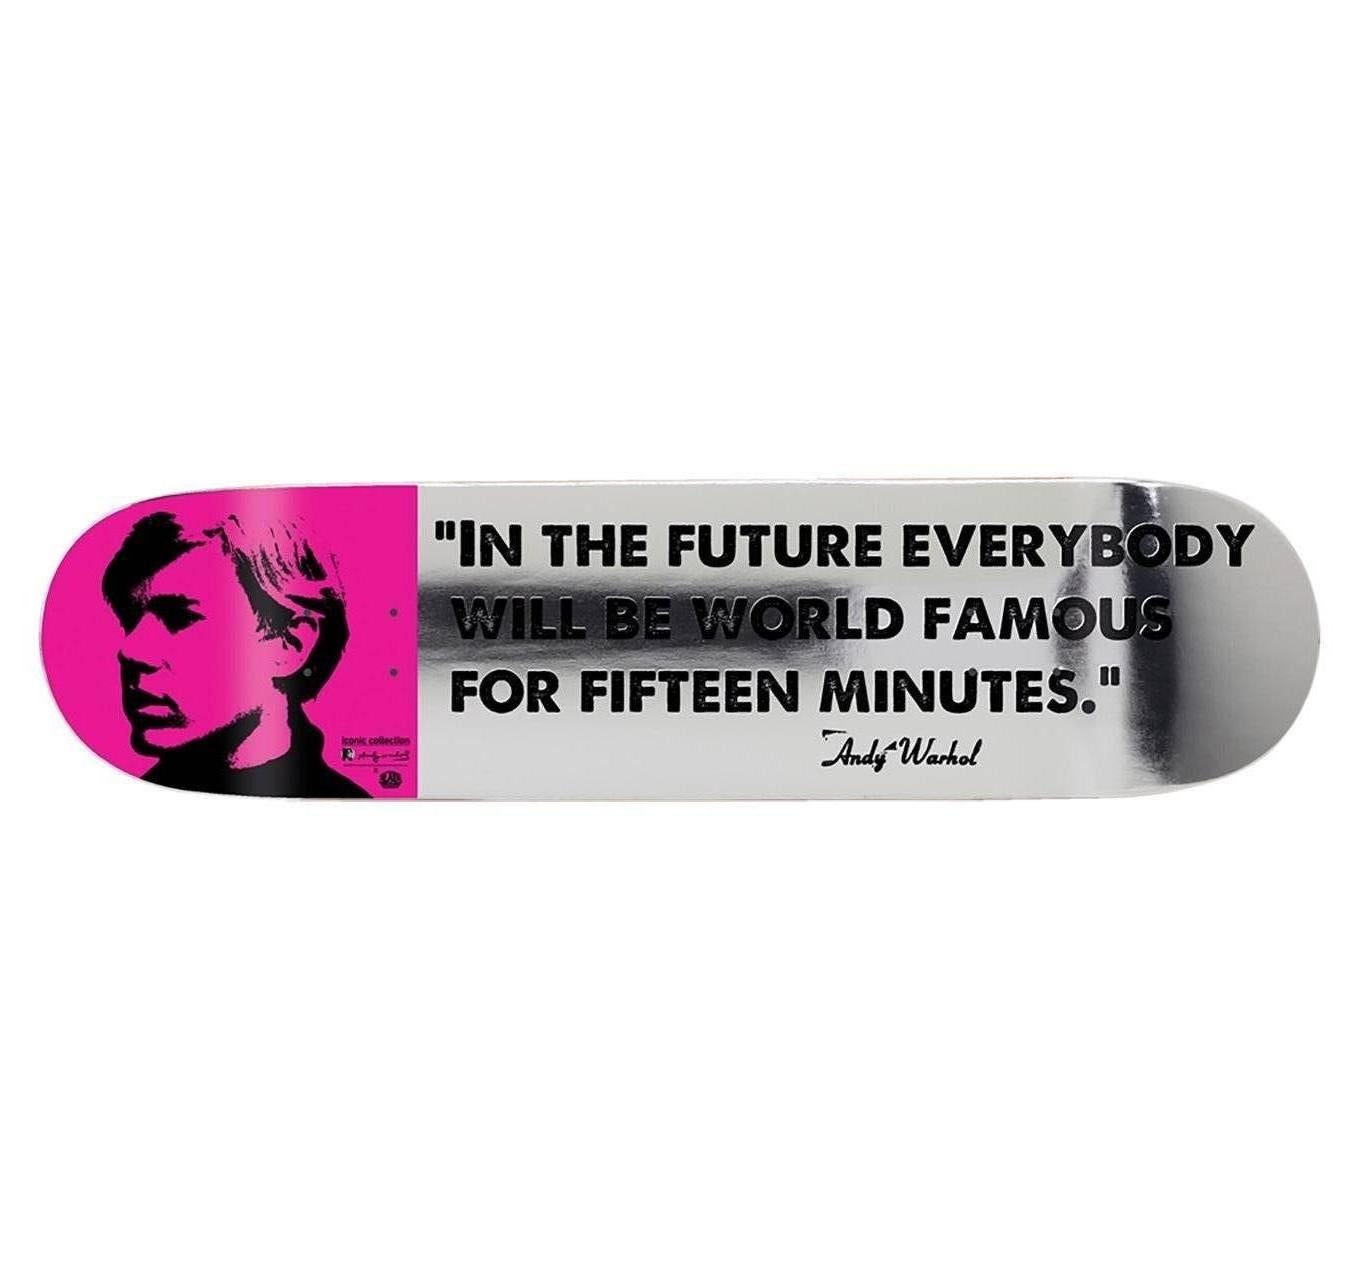 Warhol 15 Minutes of Fame skateboard deck (Warhol self portrait) - Print by (after) Andy Warhol